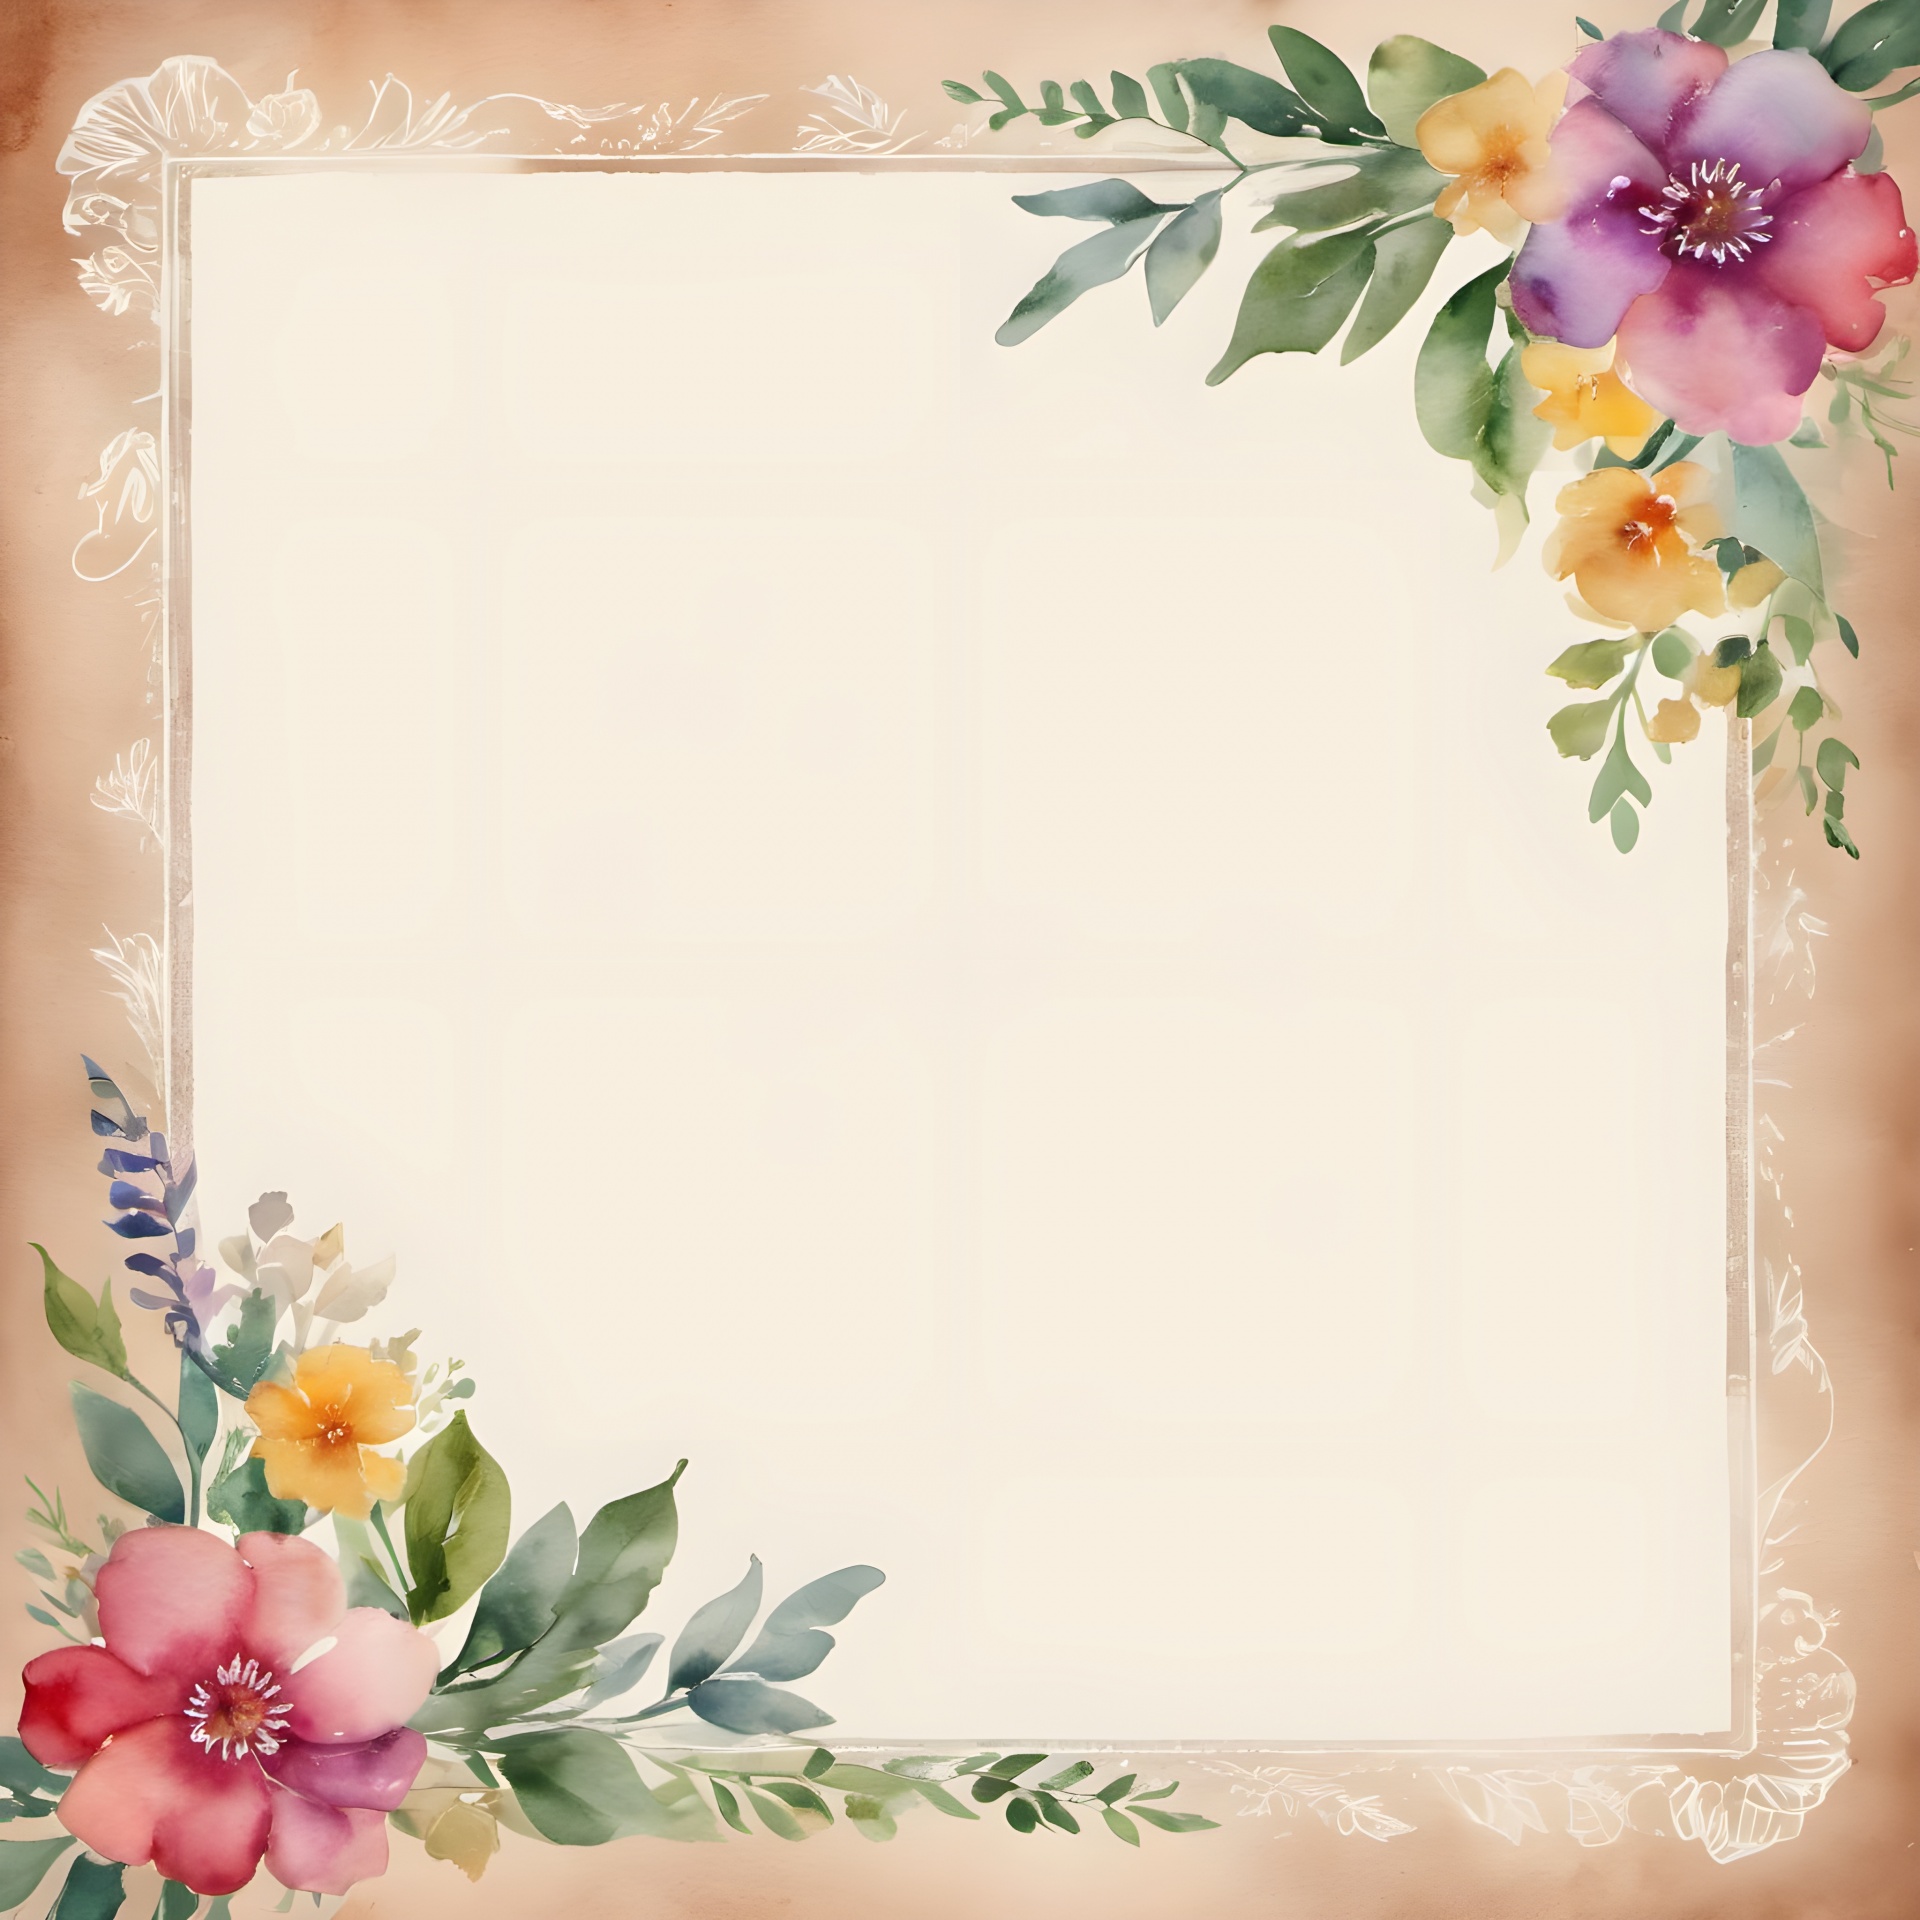 Parchment Paper Background Free Stock Photo - Public Domain Pictures